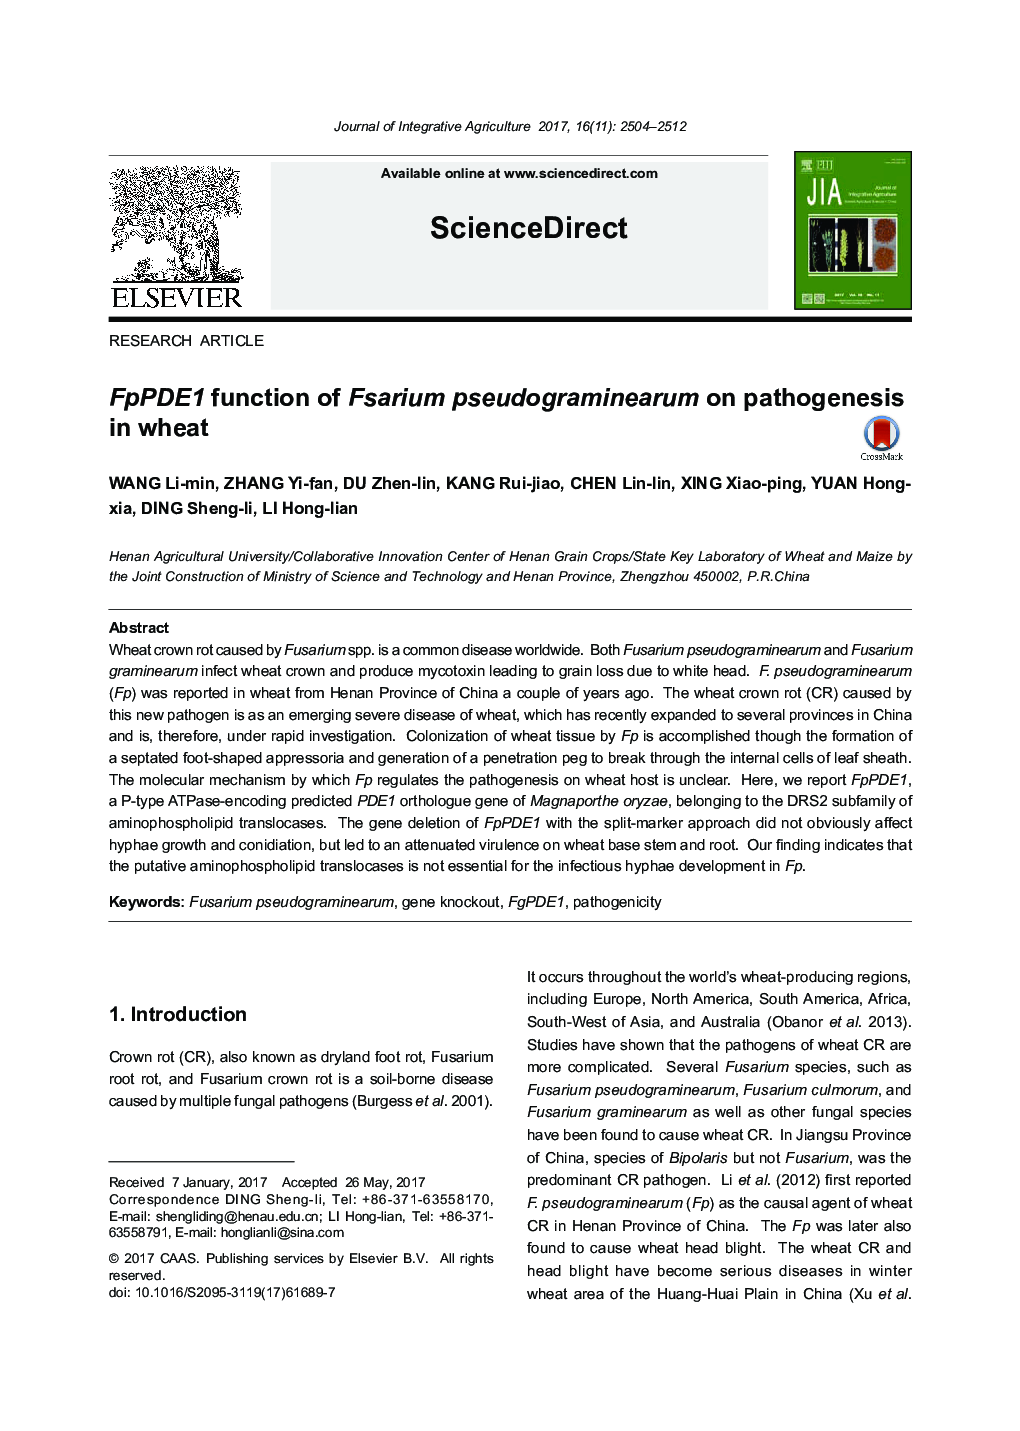 FpPDE1 function of Fsarium pseudograminearum on pathogenesis in wheat